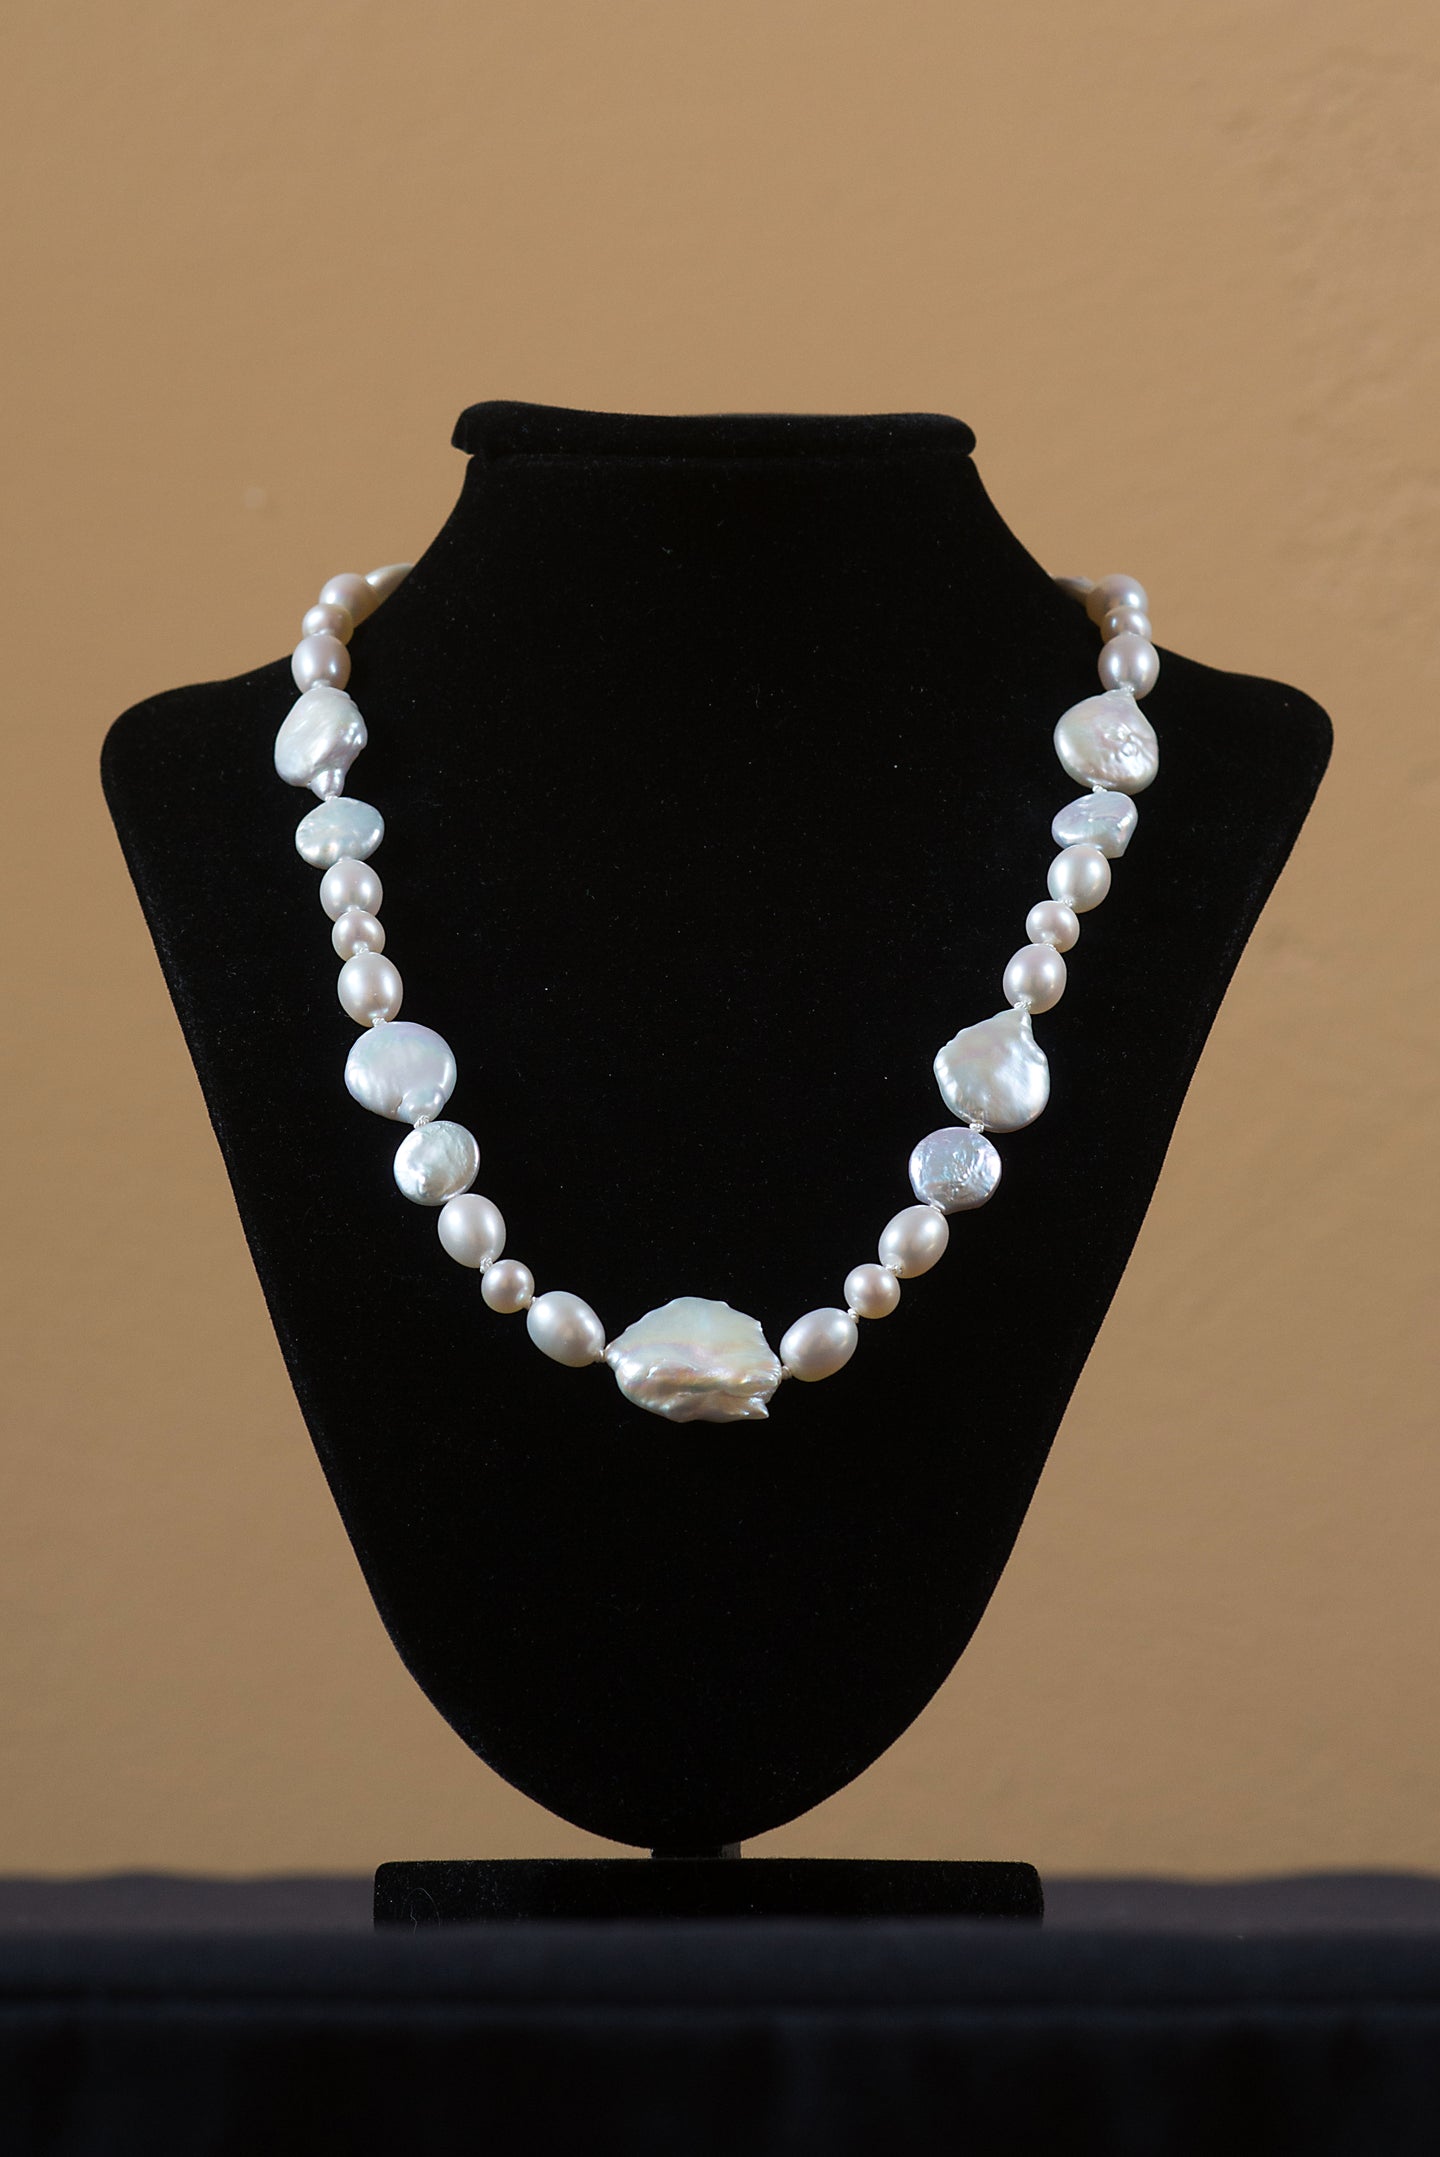 Necklace - Freshwater Pearls, Swarovski Crystal